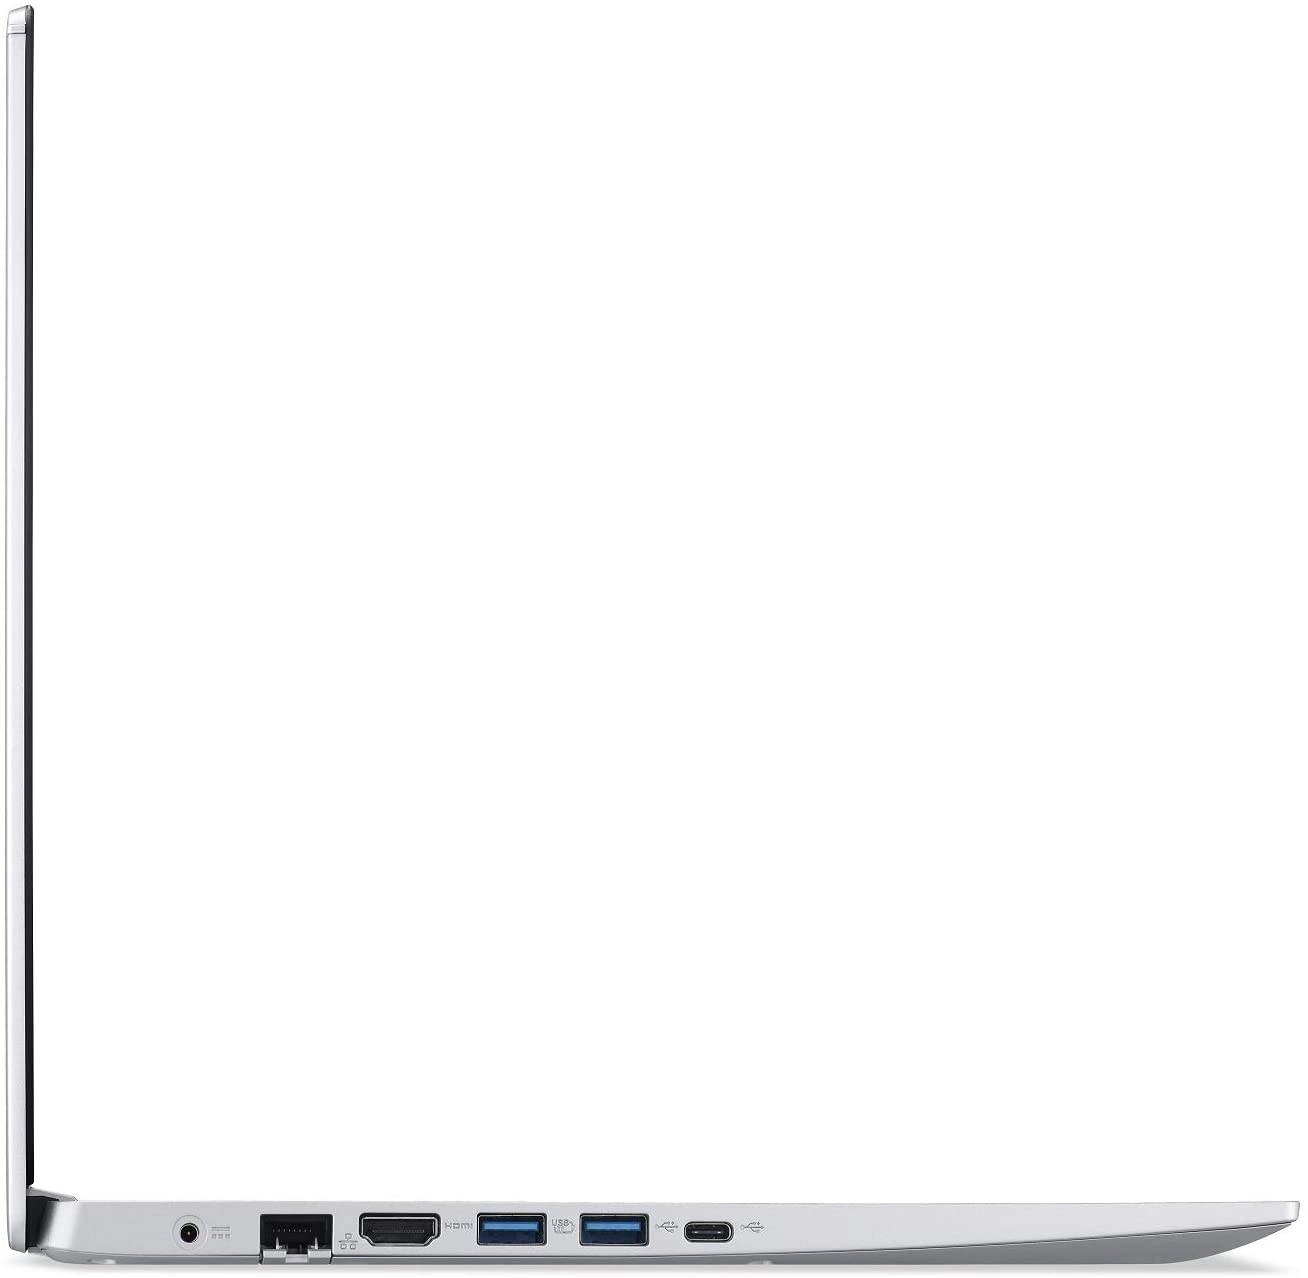 Acer A515-44-R41B laptop image